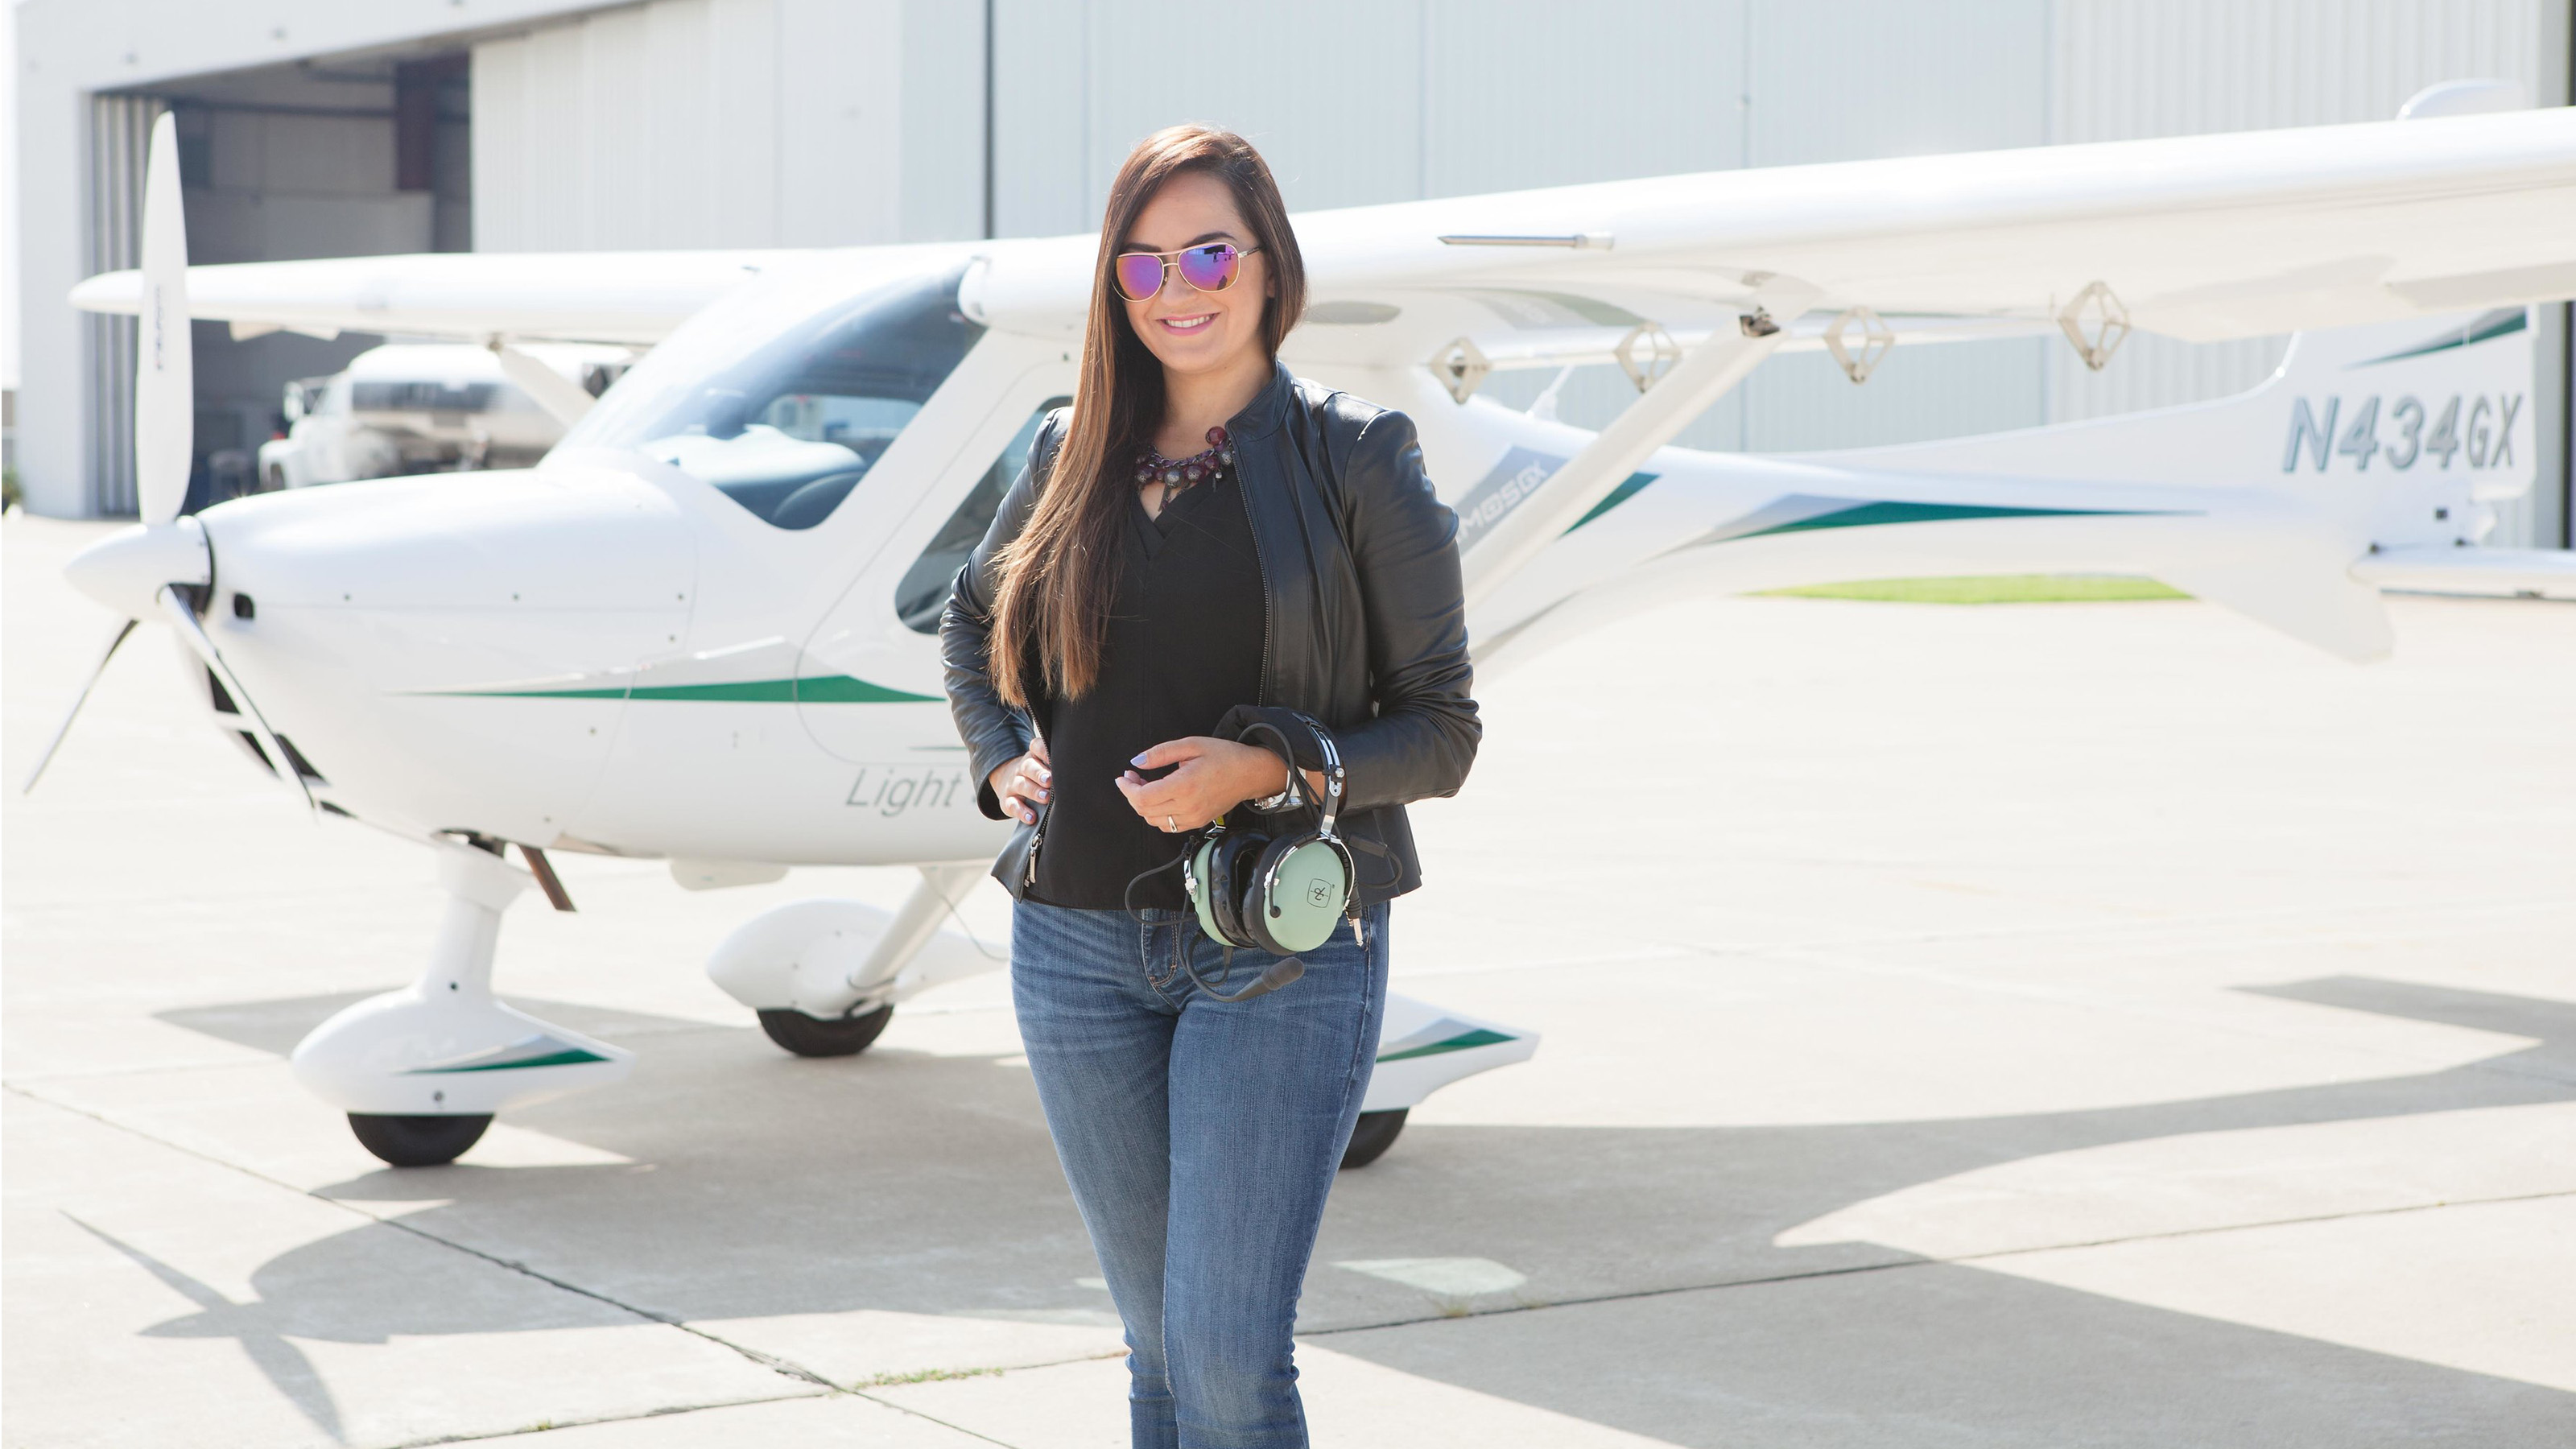 'Ella Ama Volar': She loves to fly